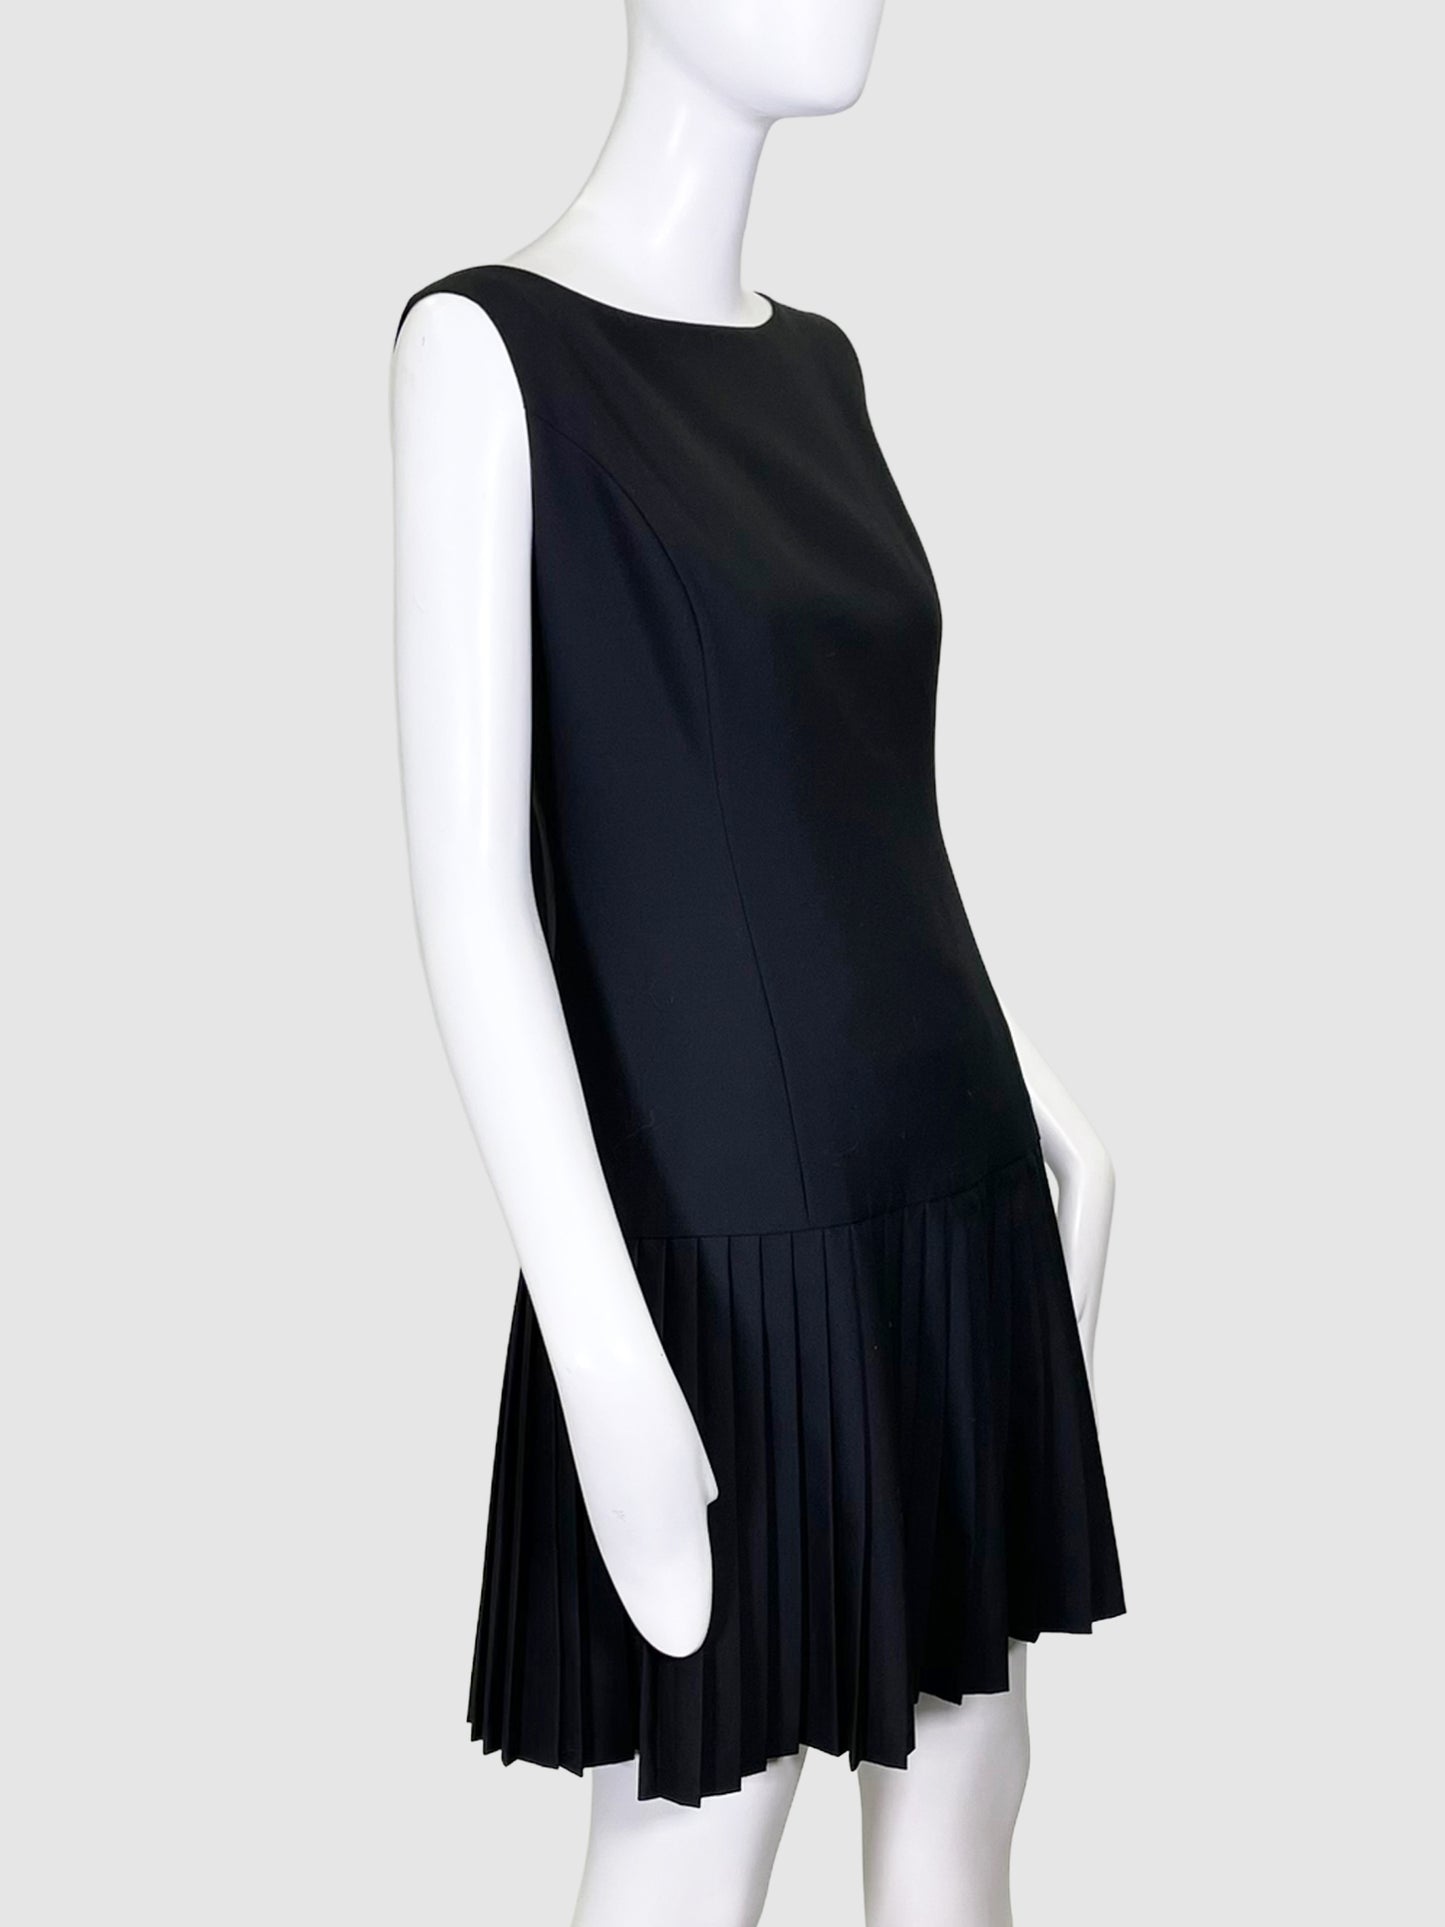 Versace Black Cashmere Midi Dress - Size 6